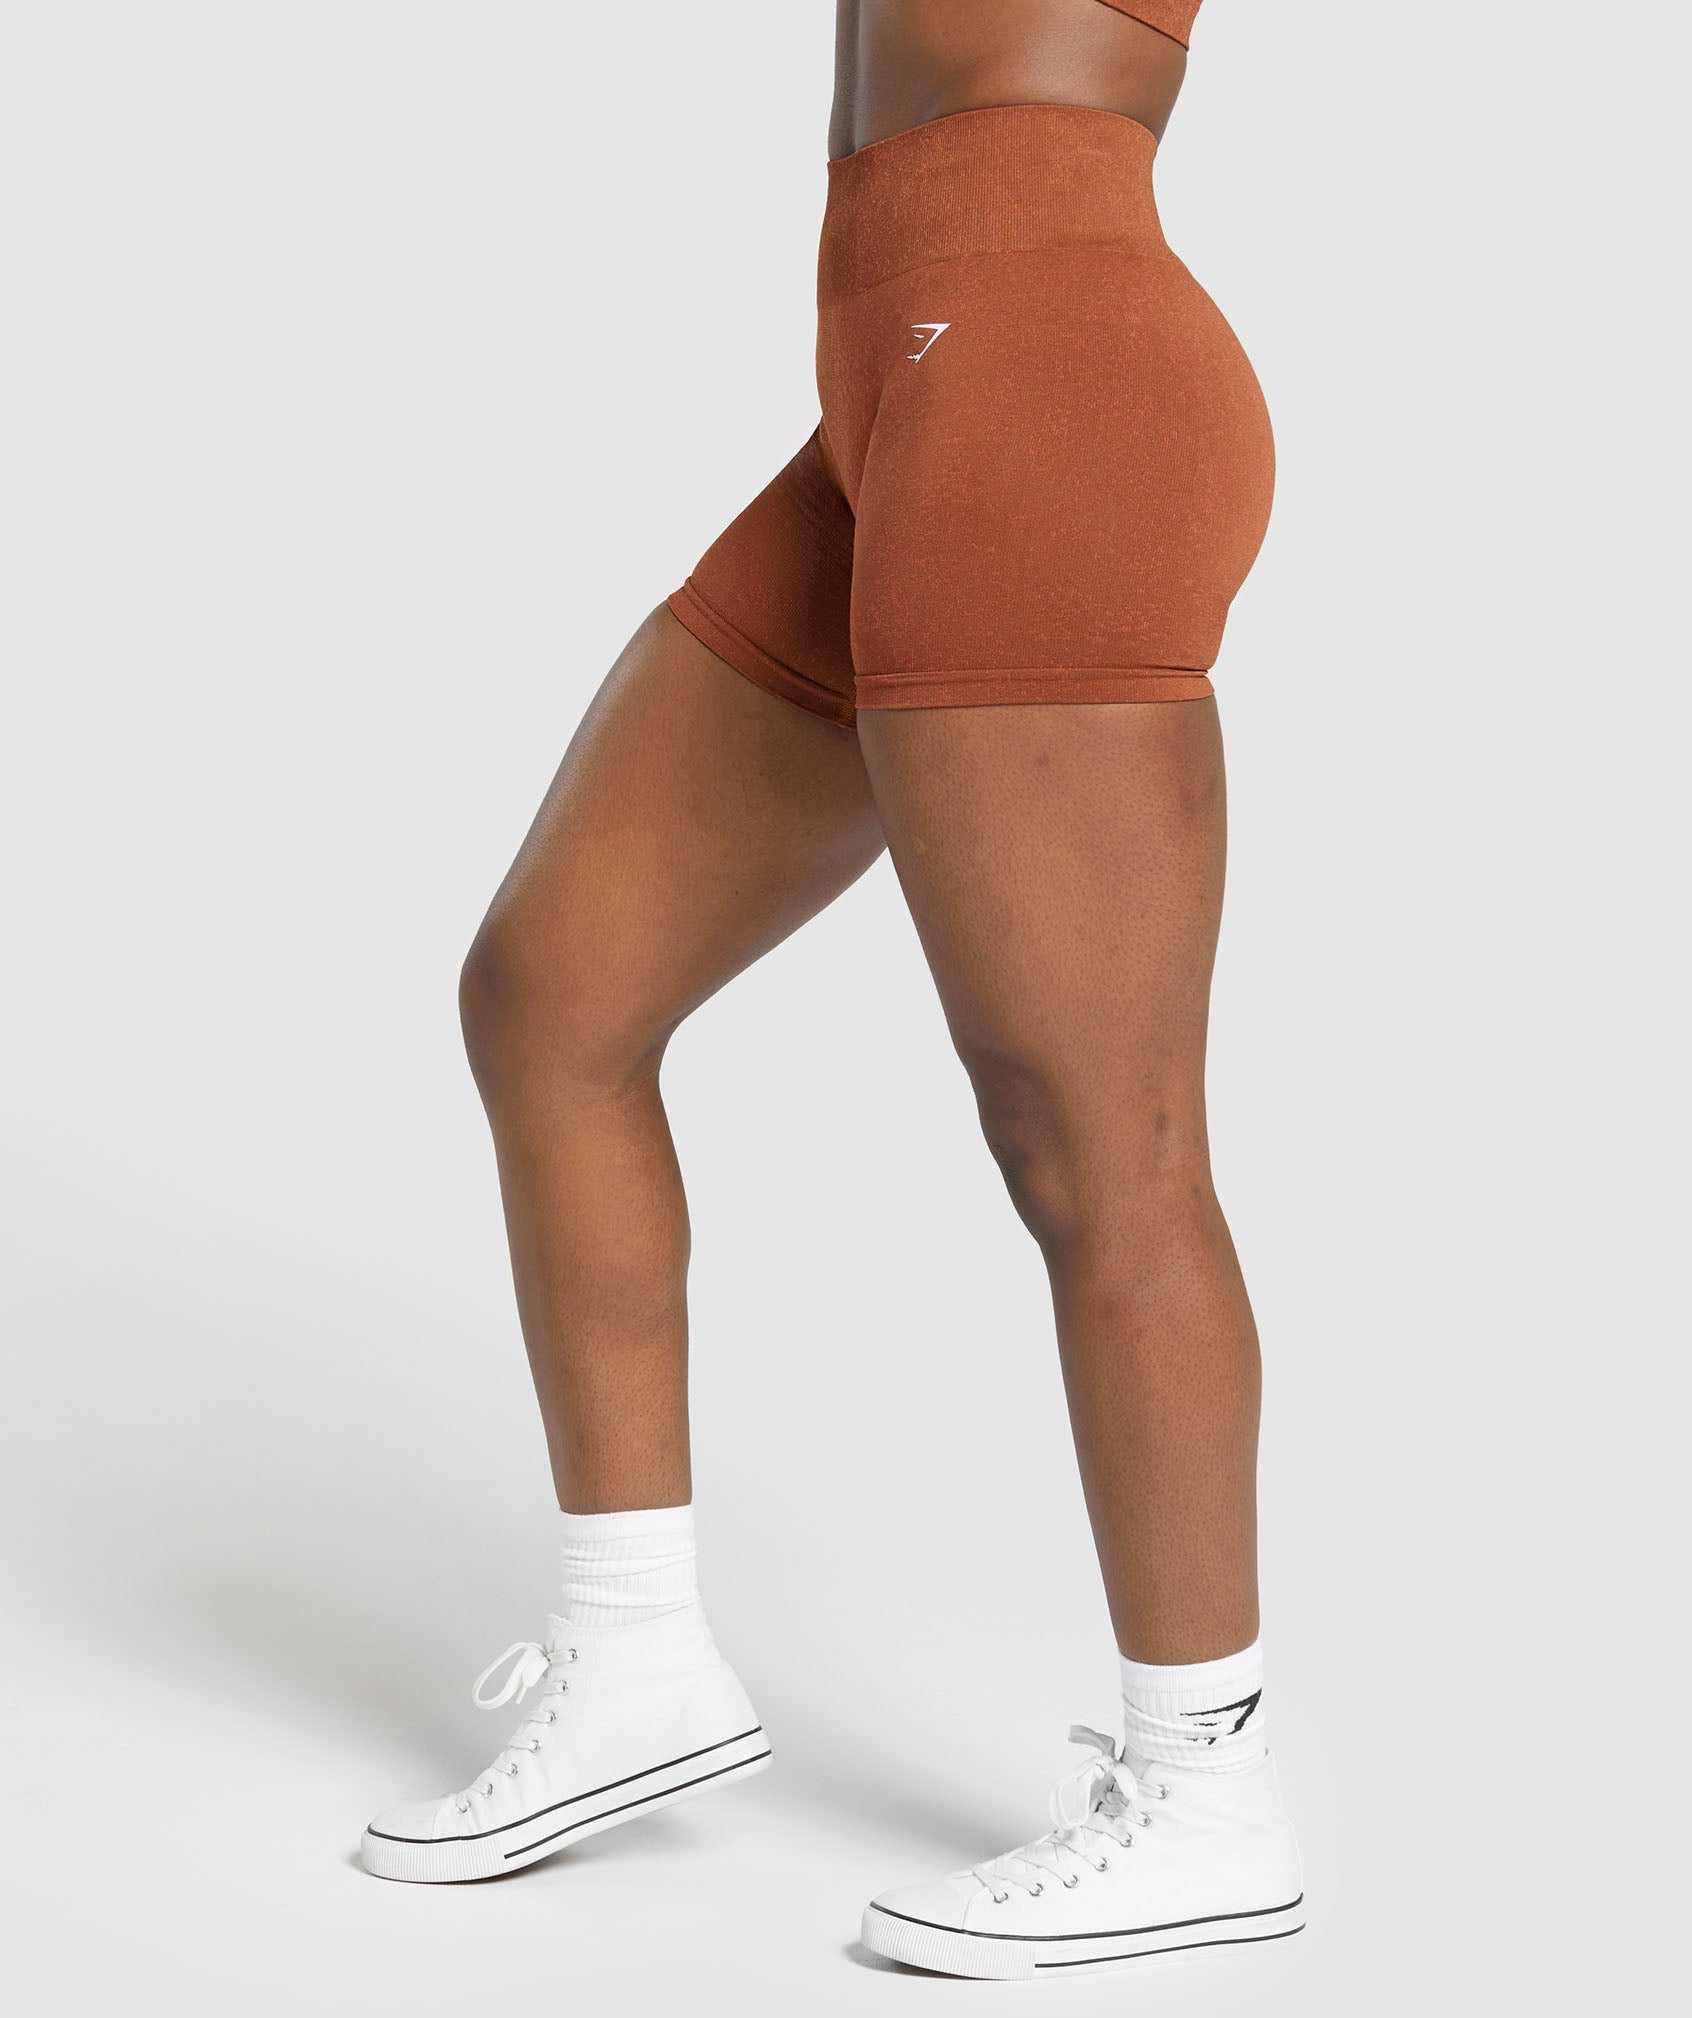 Adapt Fleck Seamless Shorts in Copper Brown/Terracotta Orange - view 3